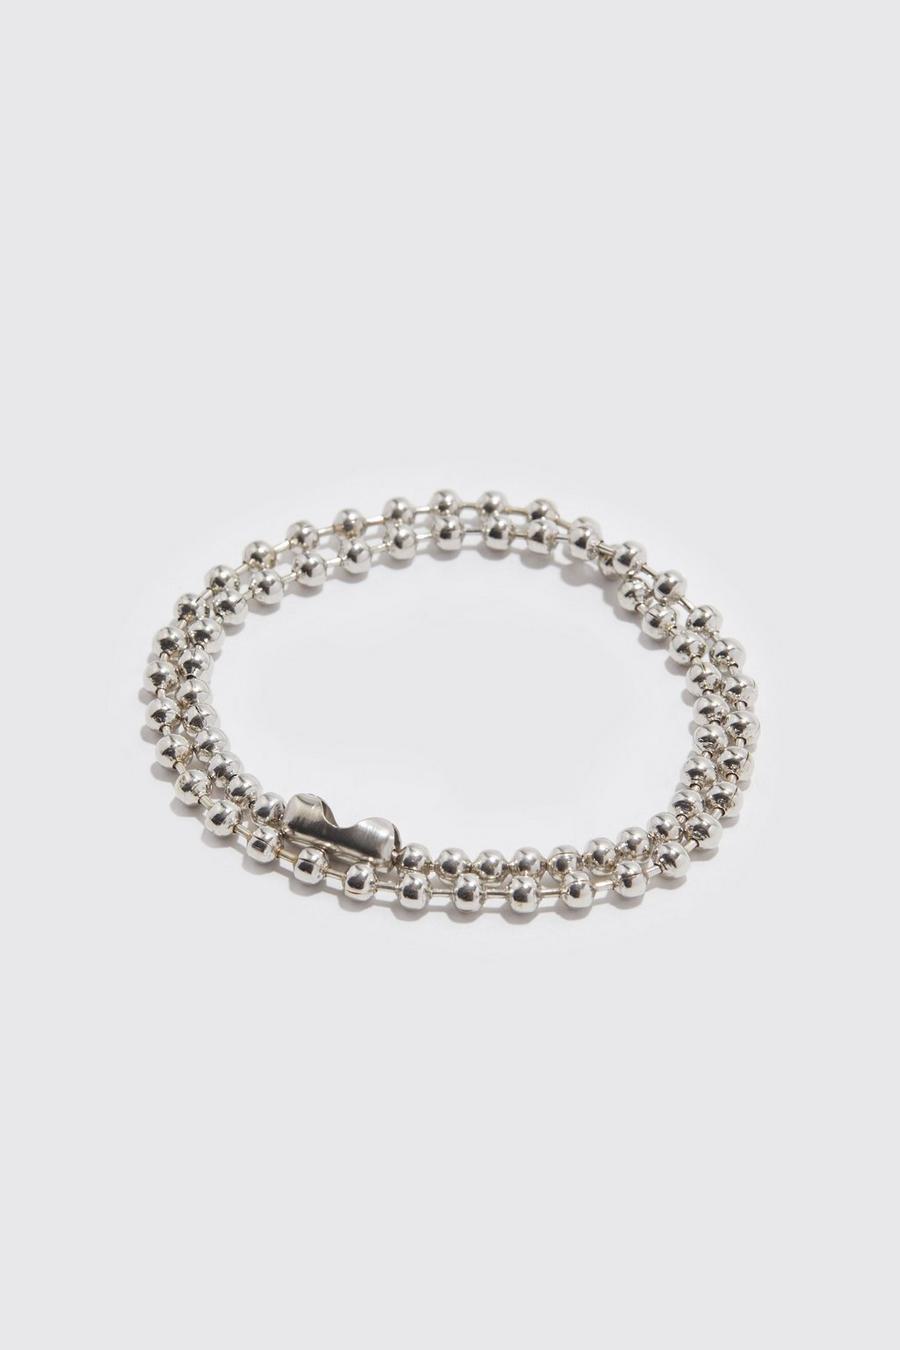 Ball Chain Bracelet, Silver